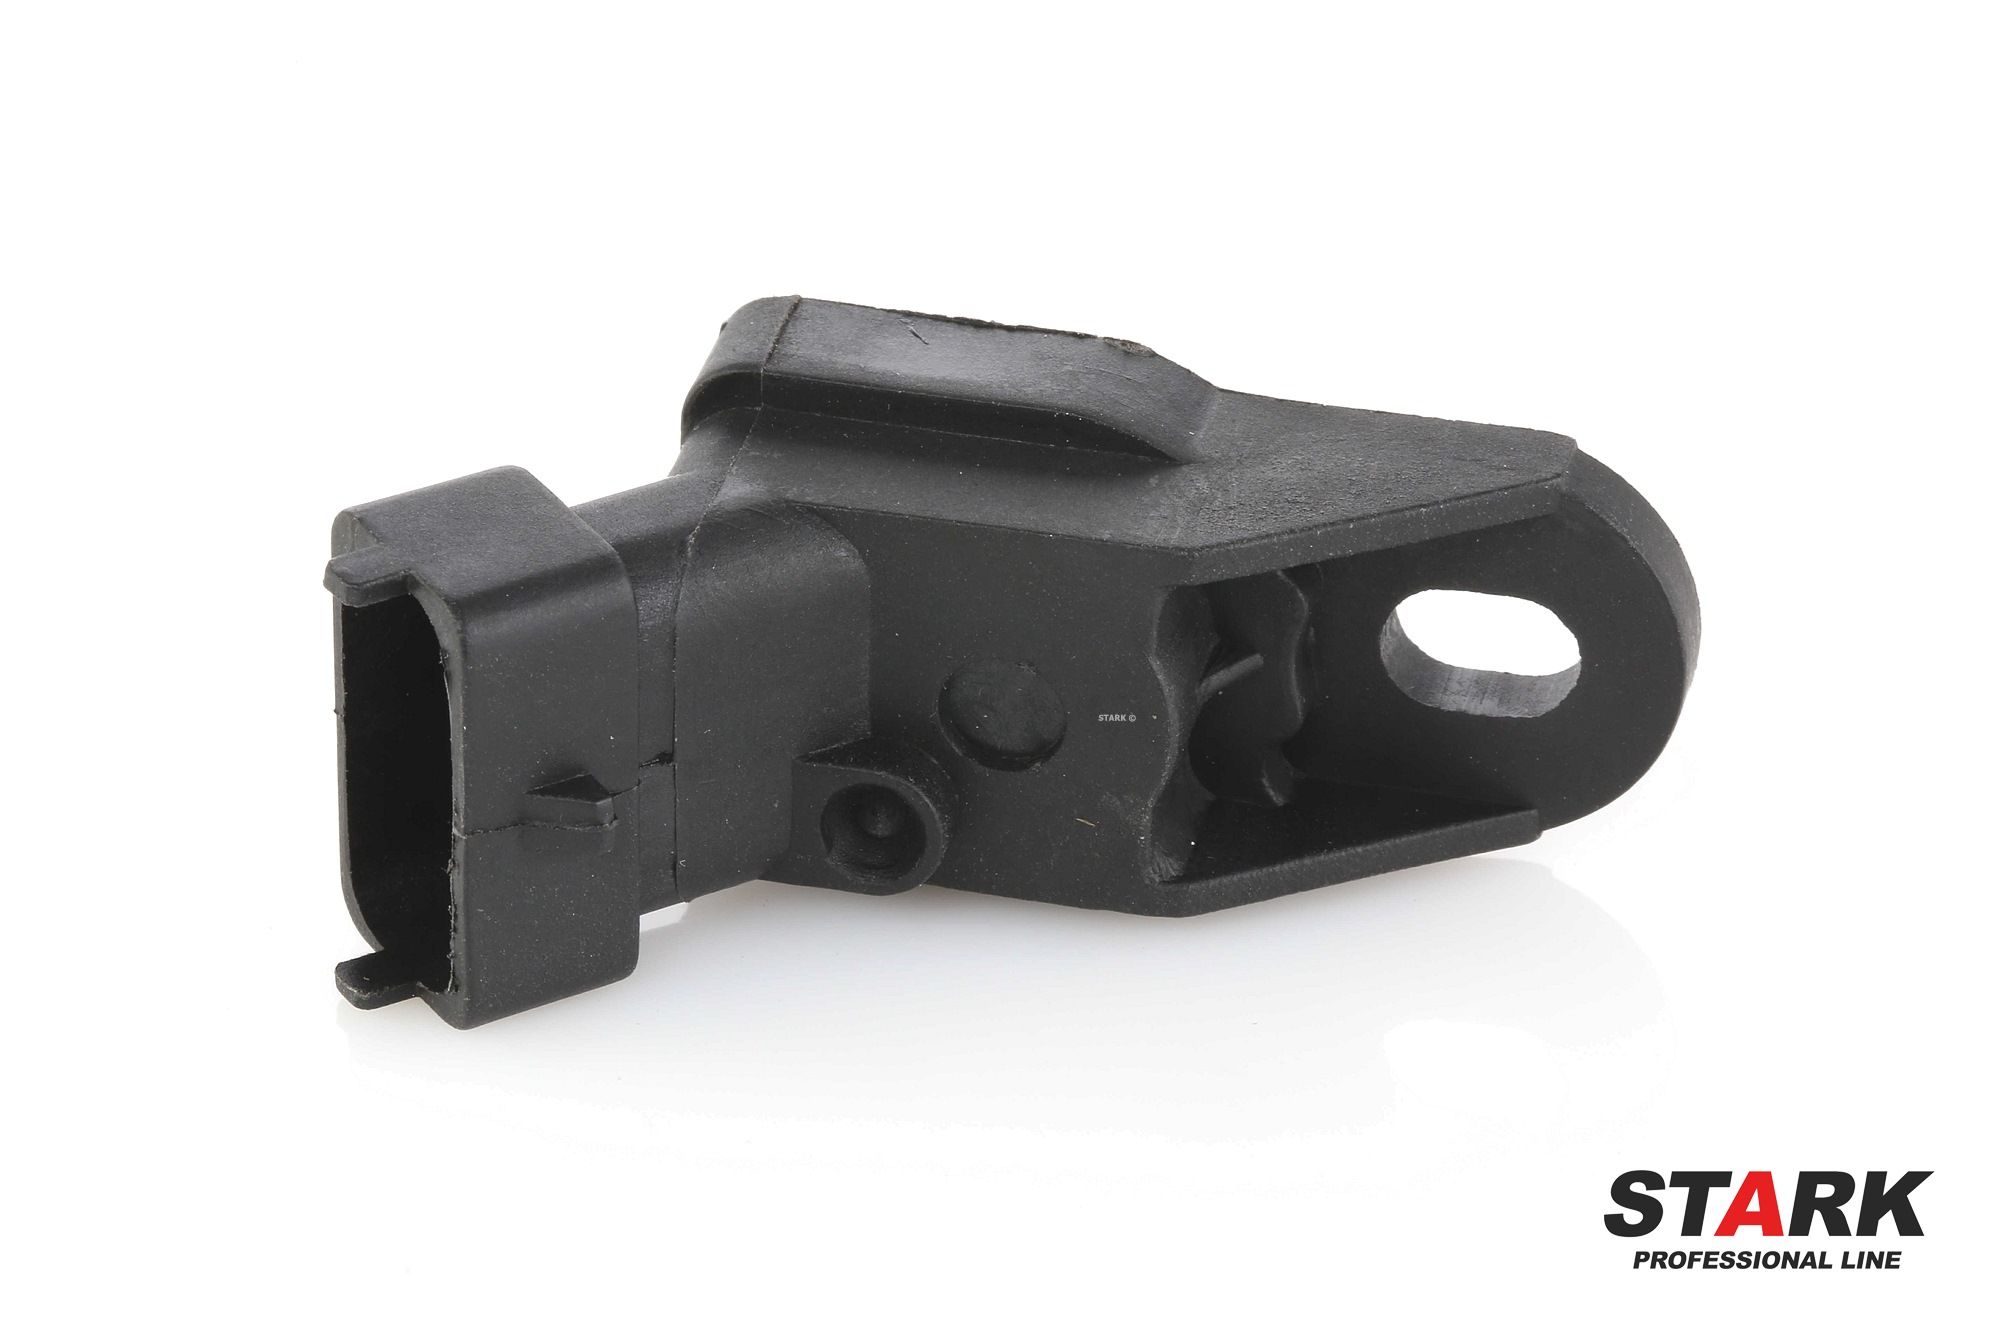 STARK SKSFP-1490005 Fuel pressure sensor with seal ring